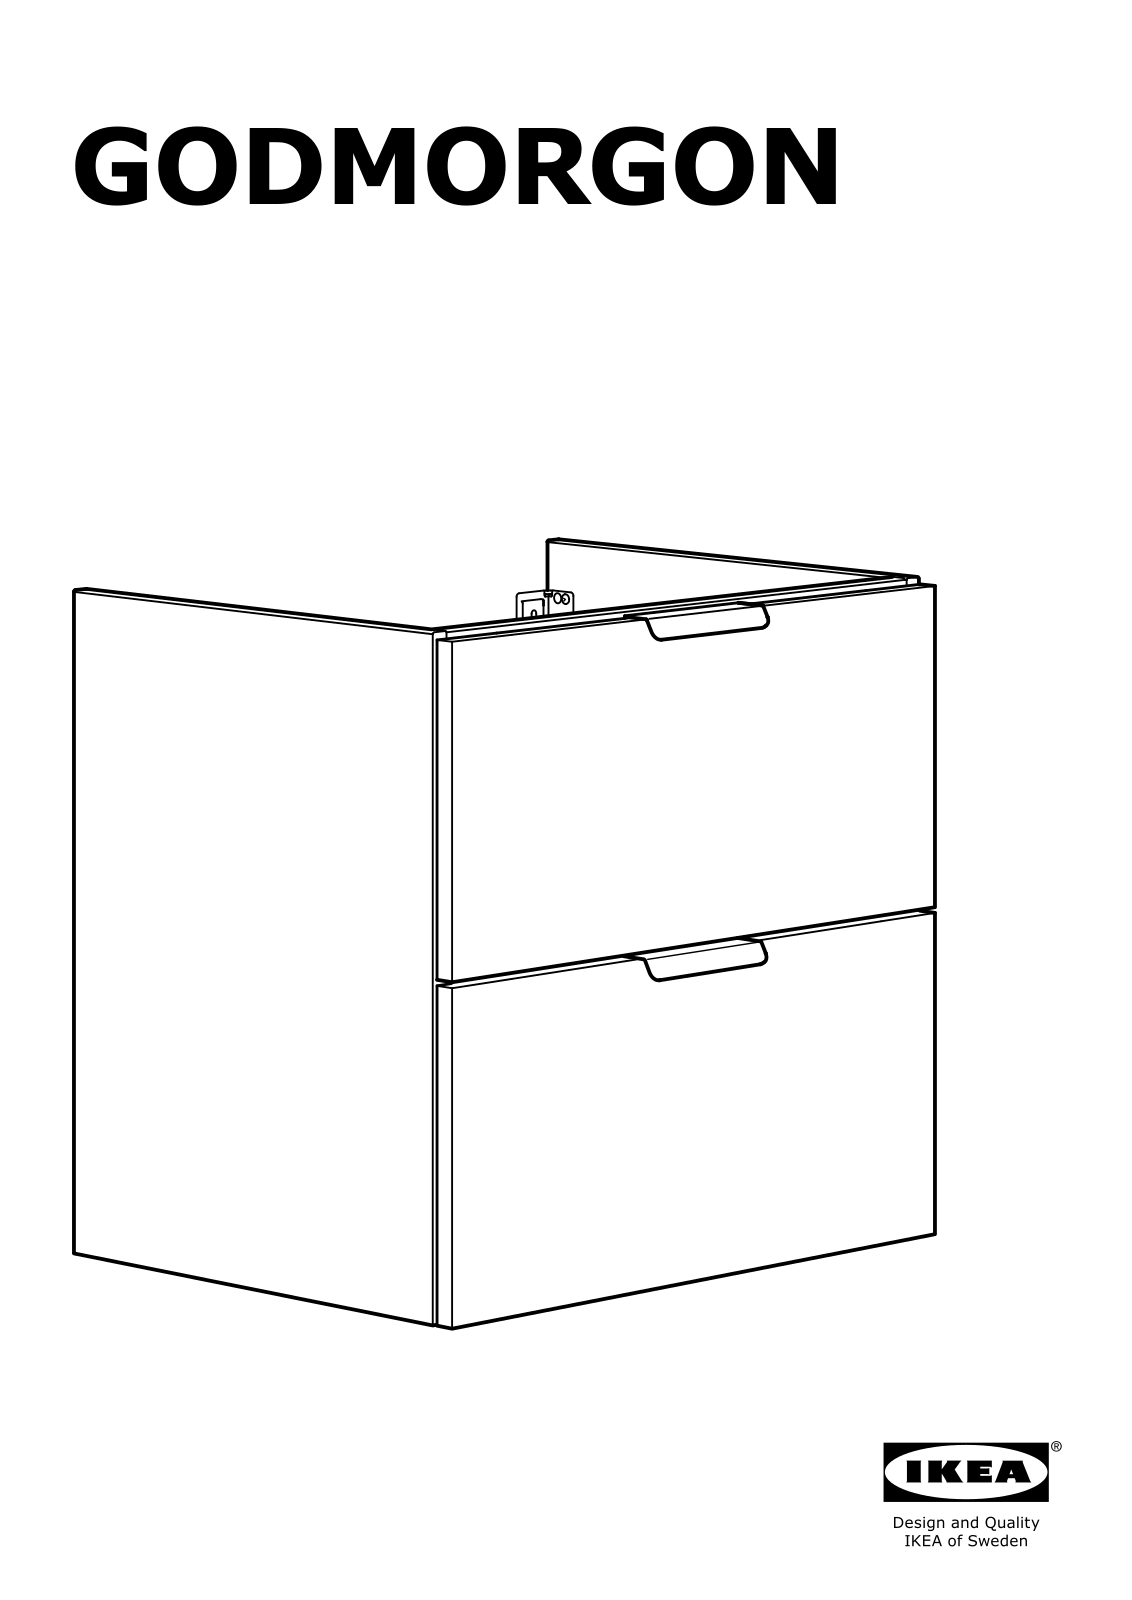 IKEA GODMORGON 60-47-58 User Manual